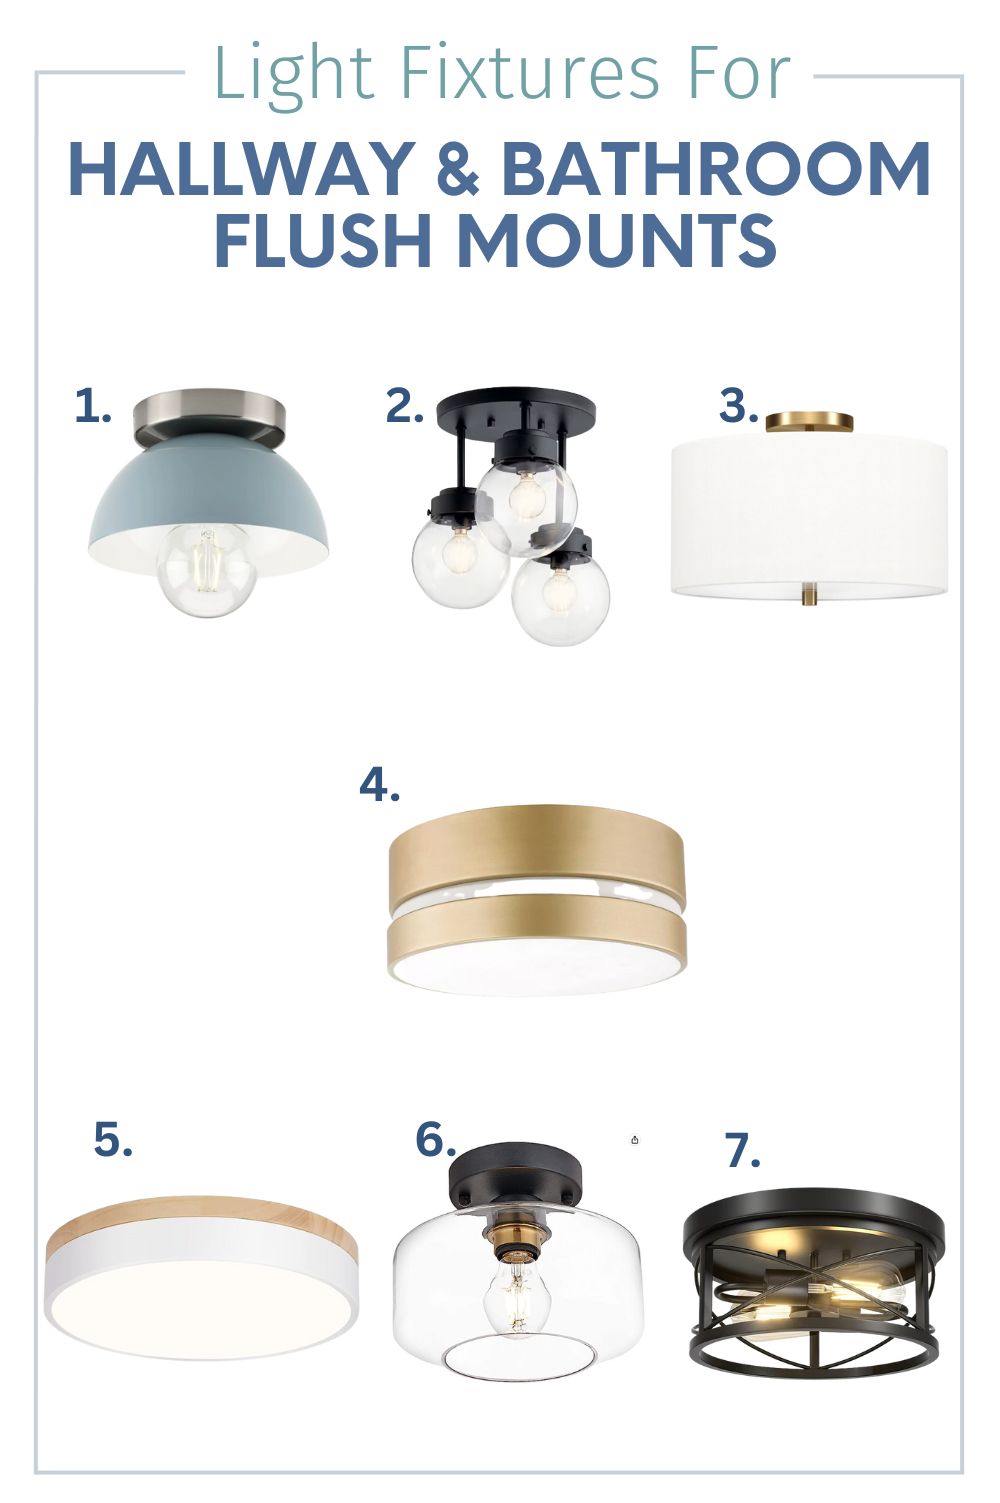 assortment of affordable hallway and bathroom flush mount light fixtures